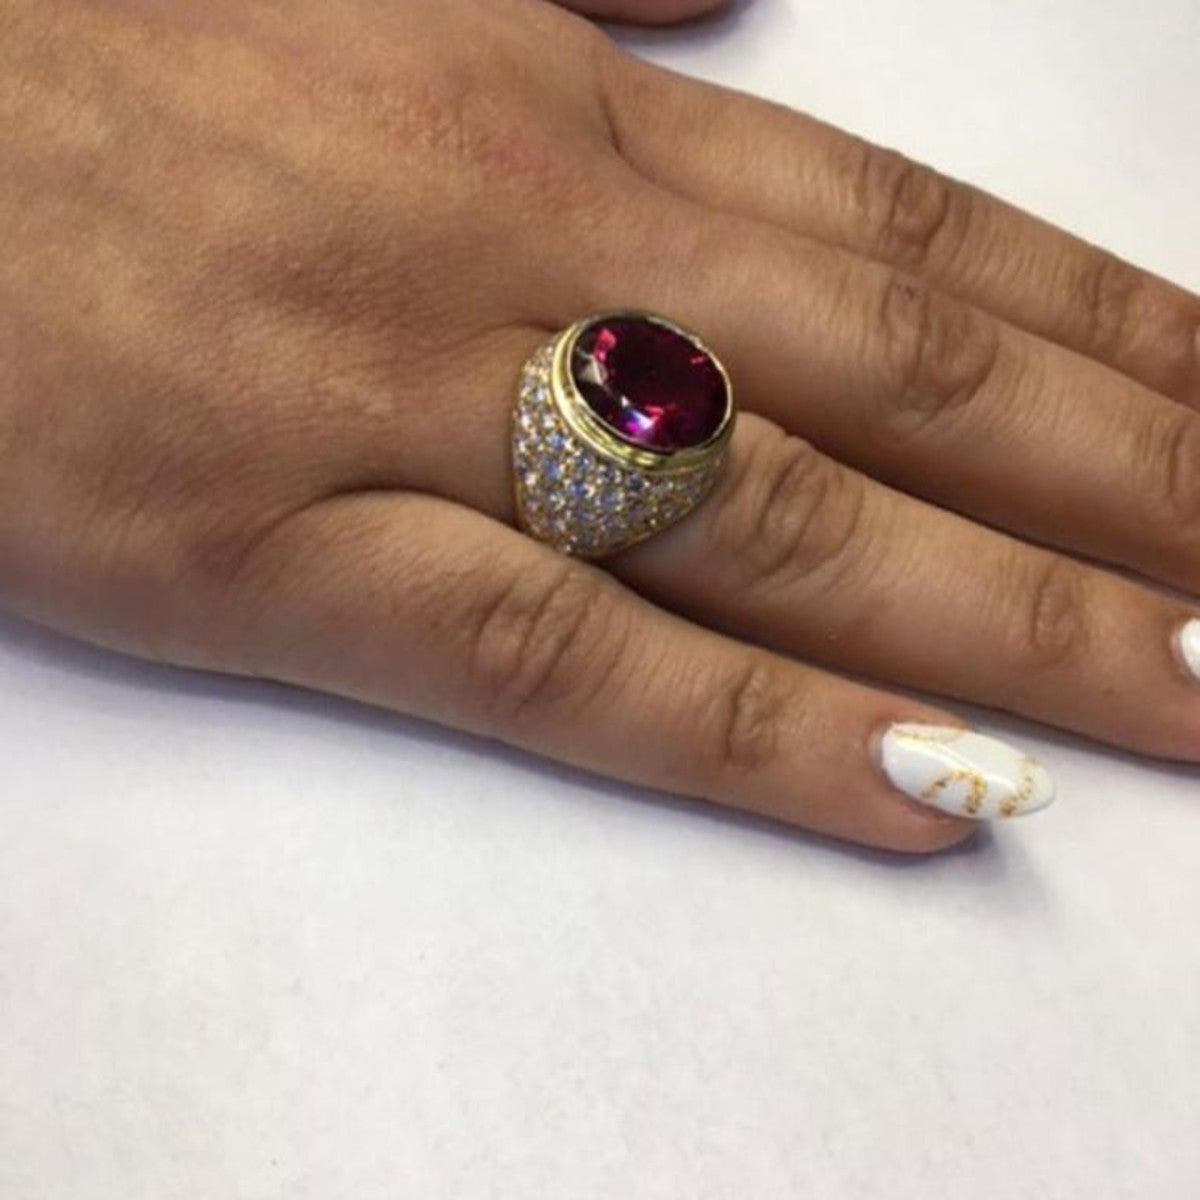 1980s 18KT Yellow Gold Rubellite Tourmaline & Diamond Ring worn on finger